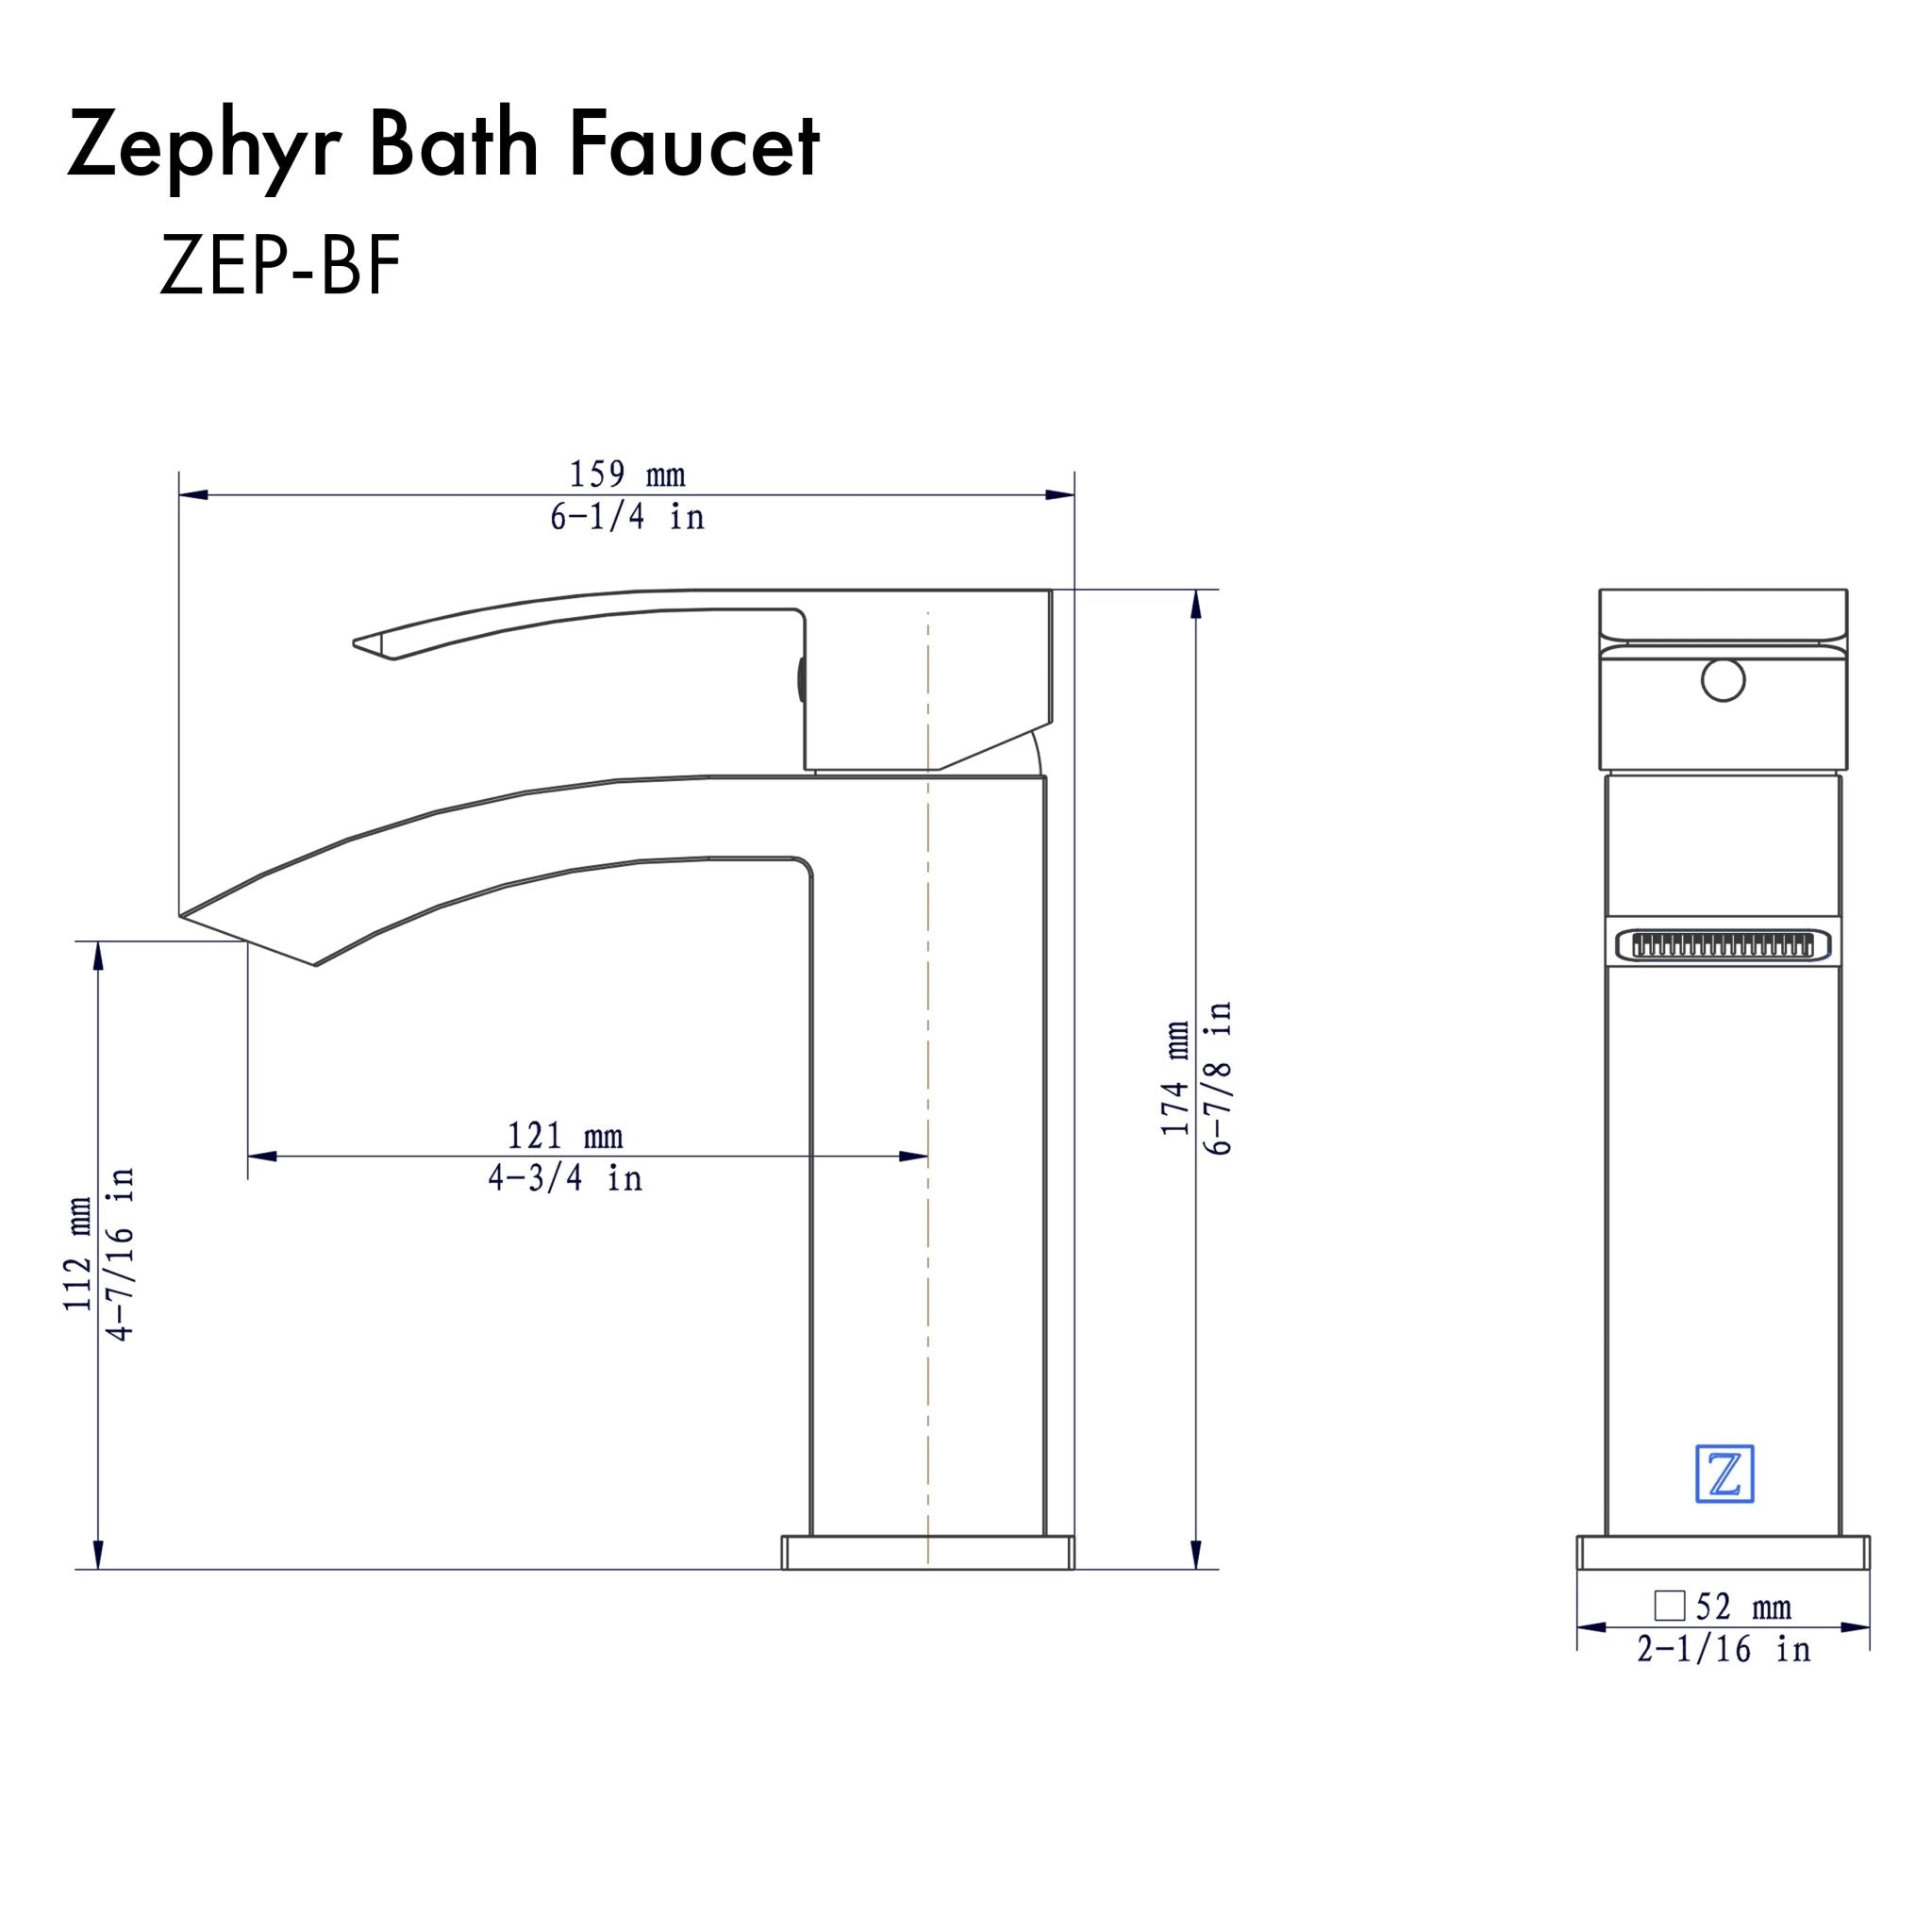 ZLINE Zephyr Bath Faucet (ZEP-BF) dimensional diagram